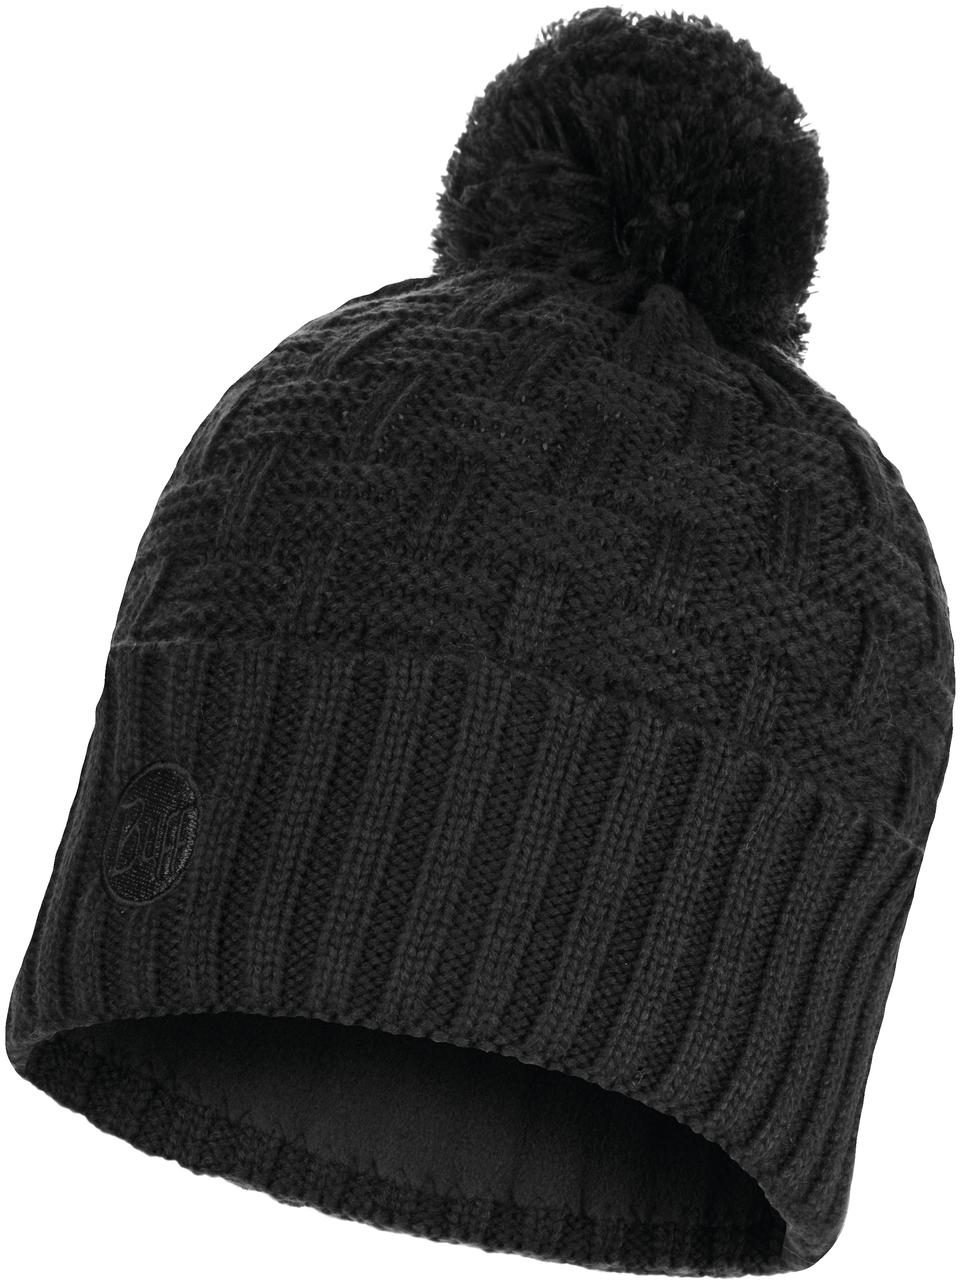 Шапка Buff Knitted & Fleece Band Hat Airon Black